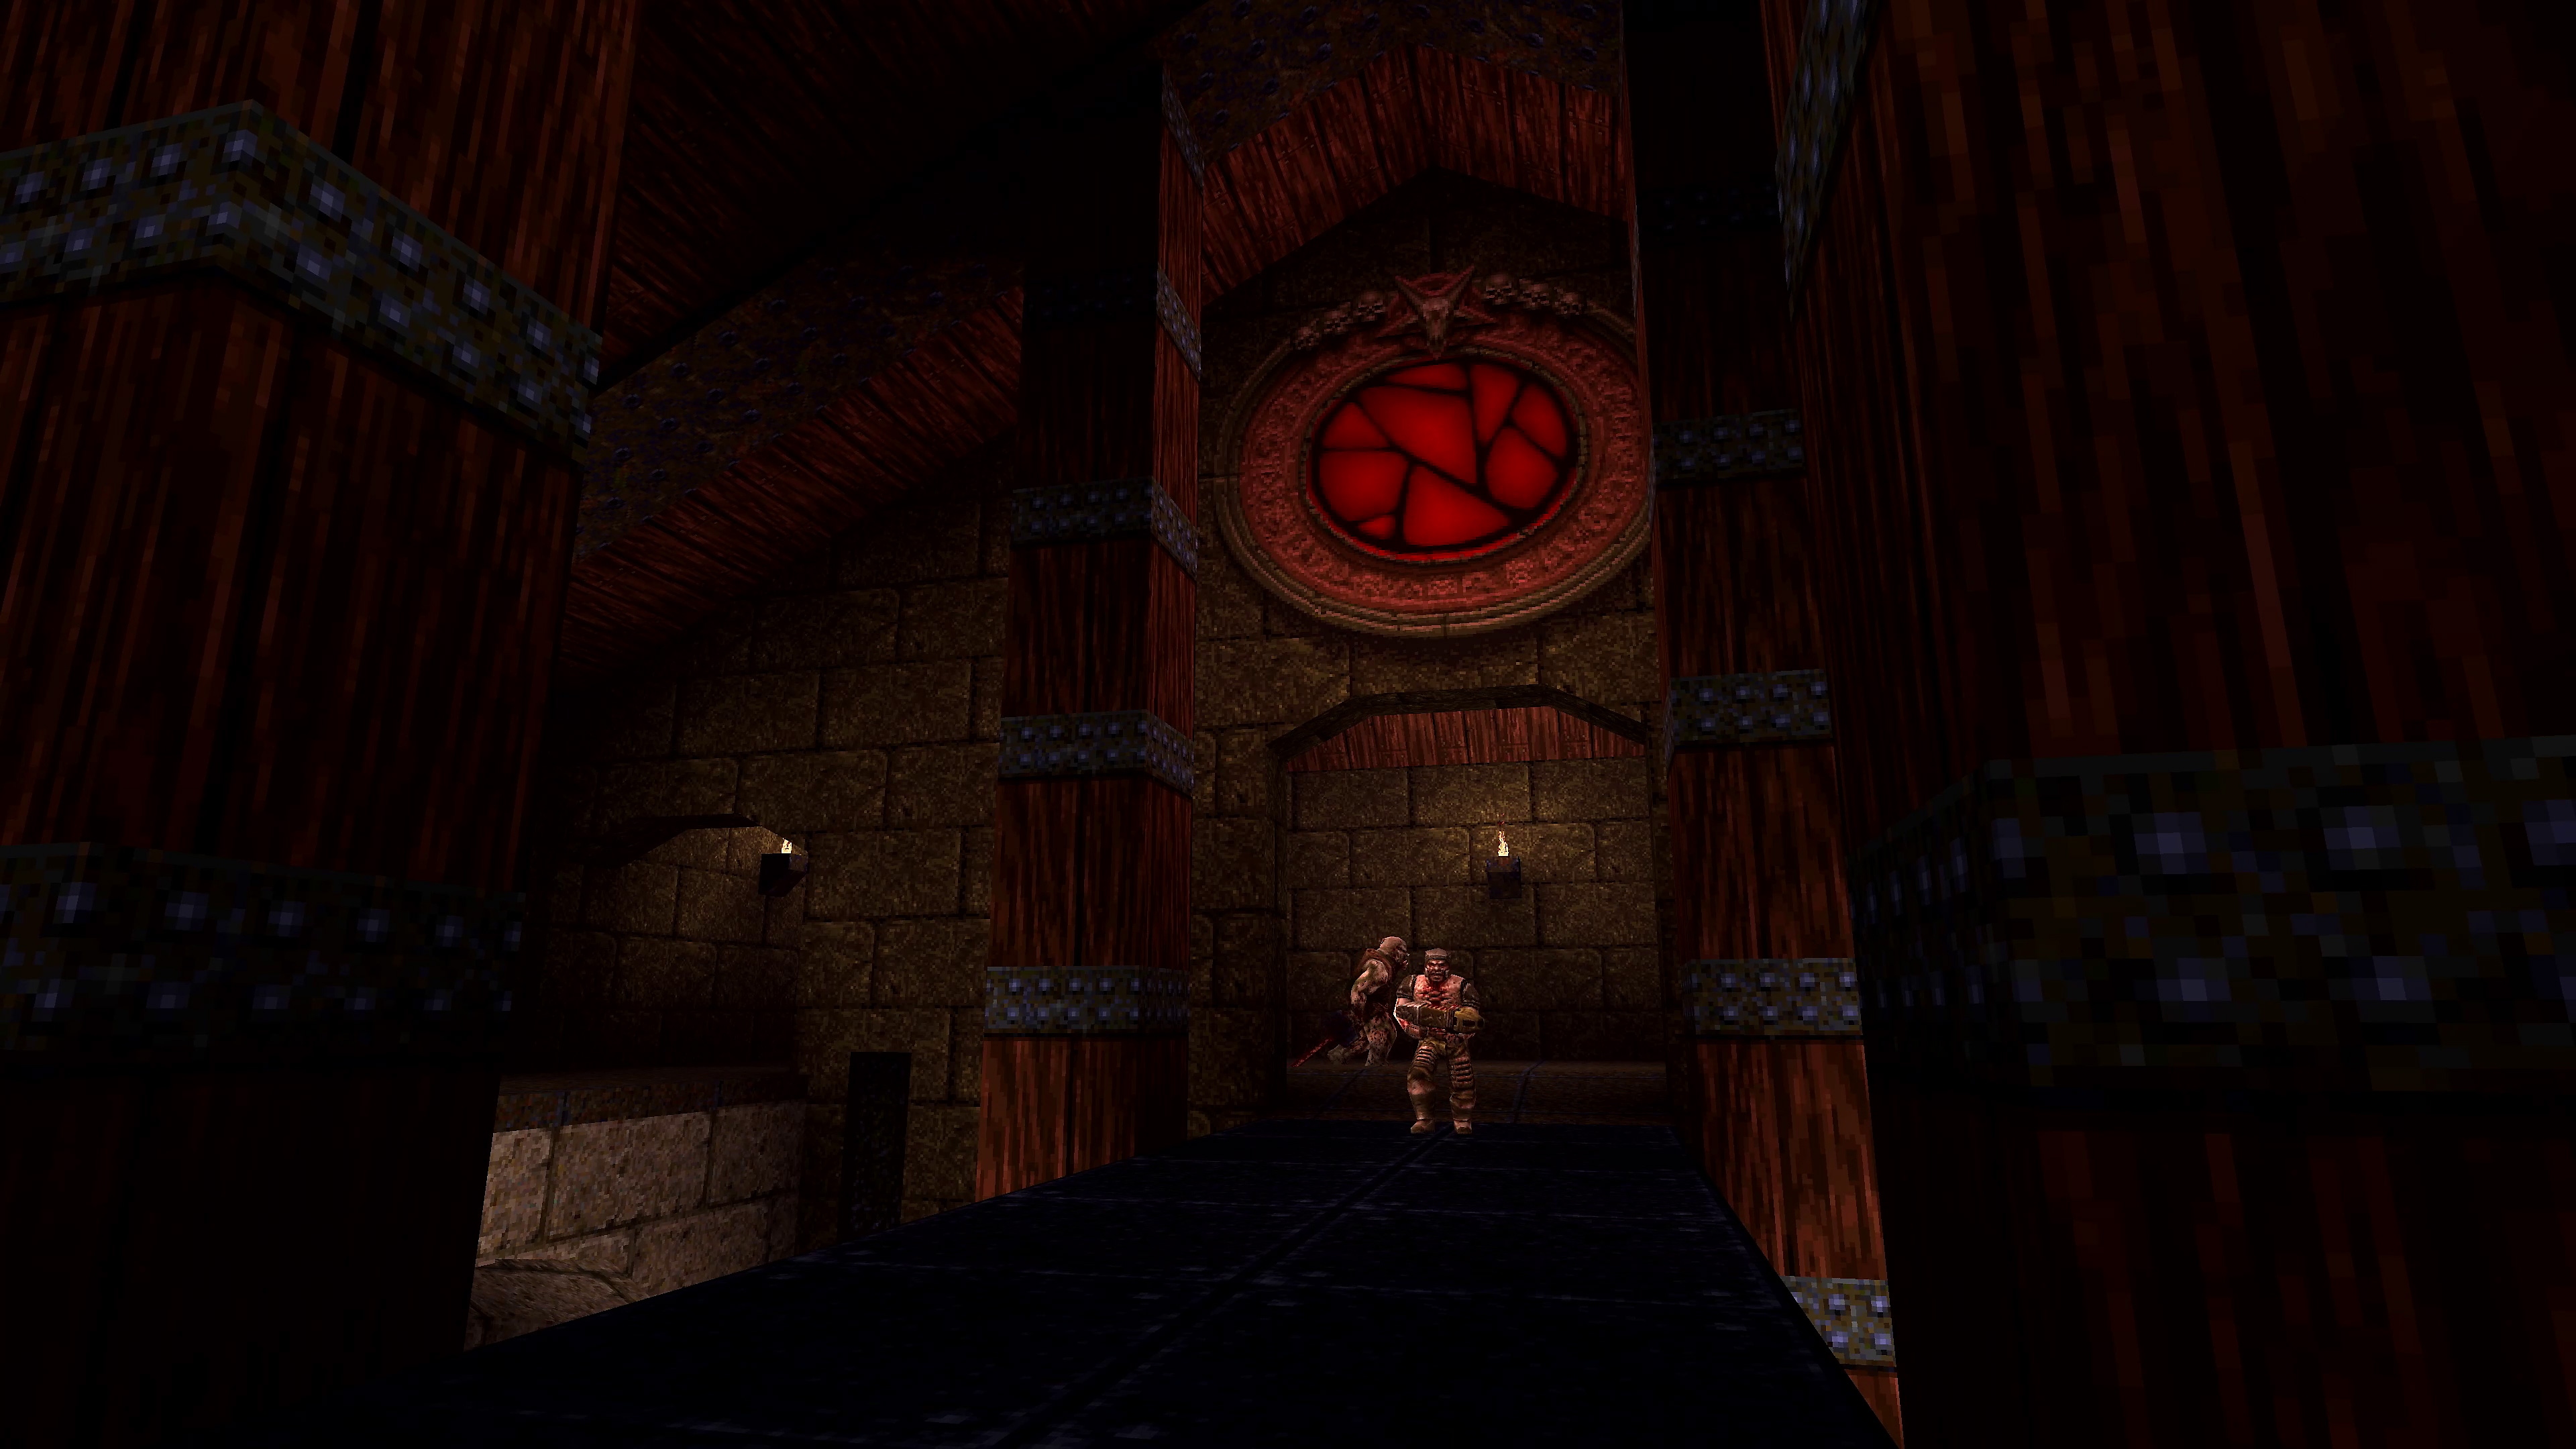 Quake – снимок экрана